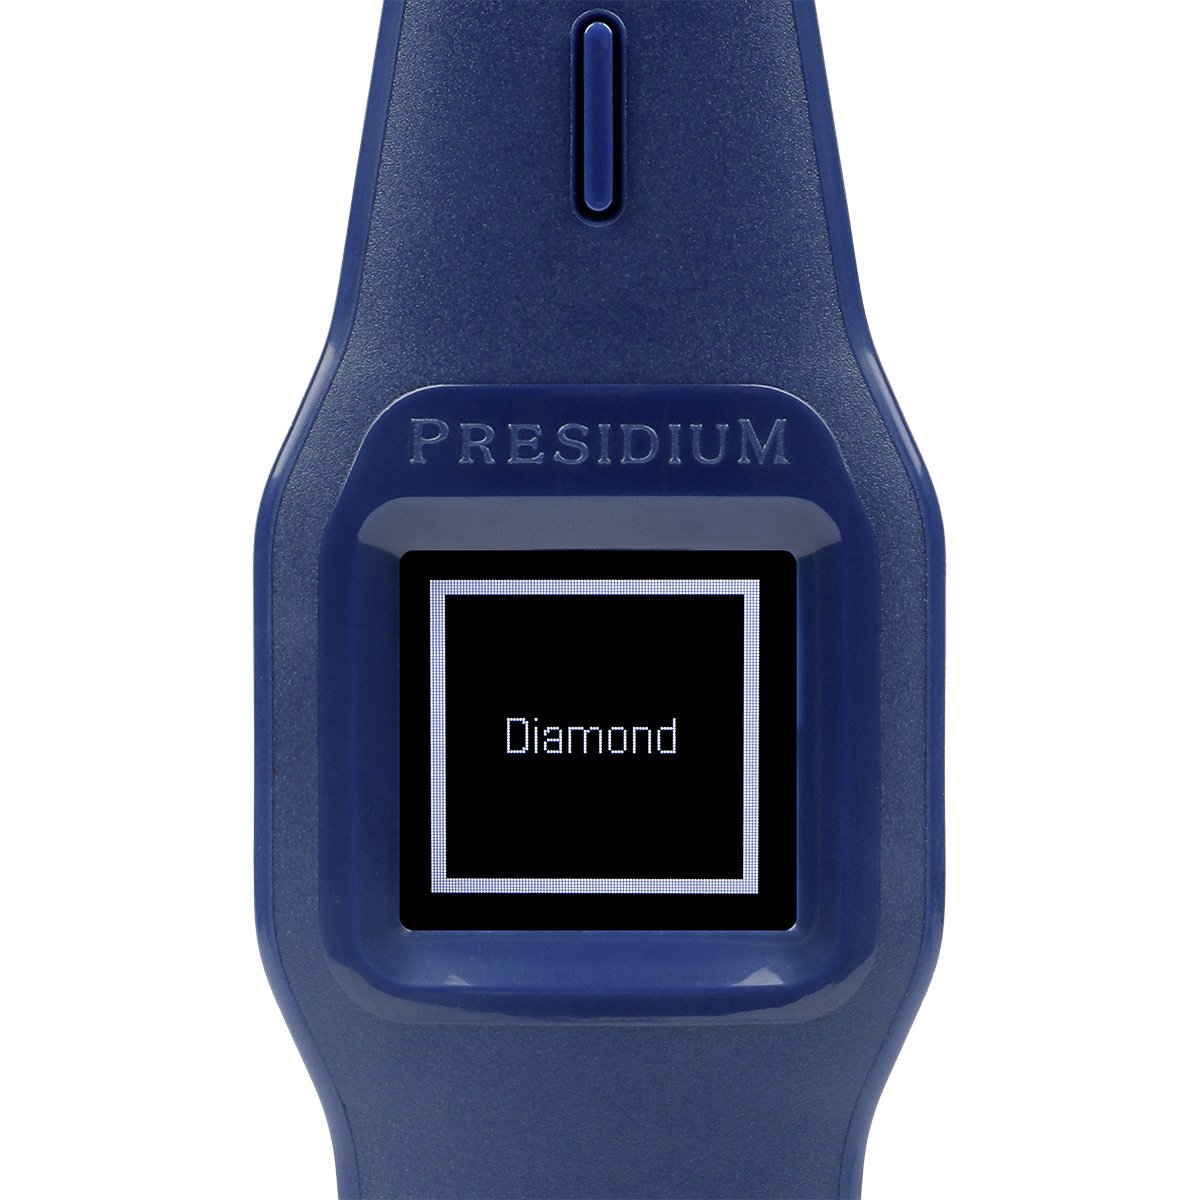 Presidium ARI Handtestgerät für farblose Diamanten